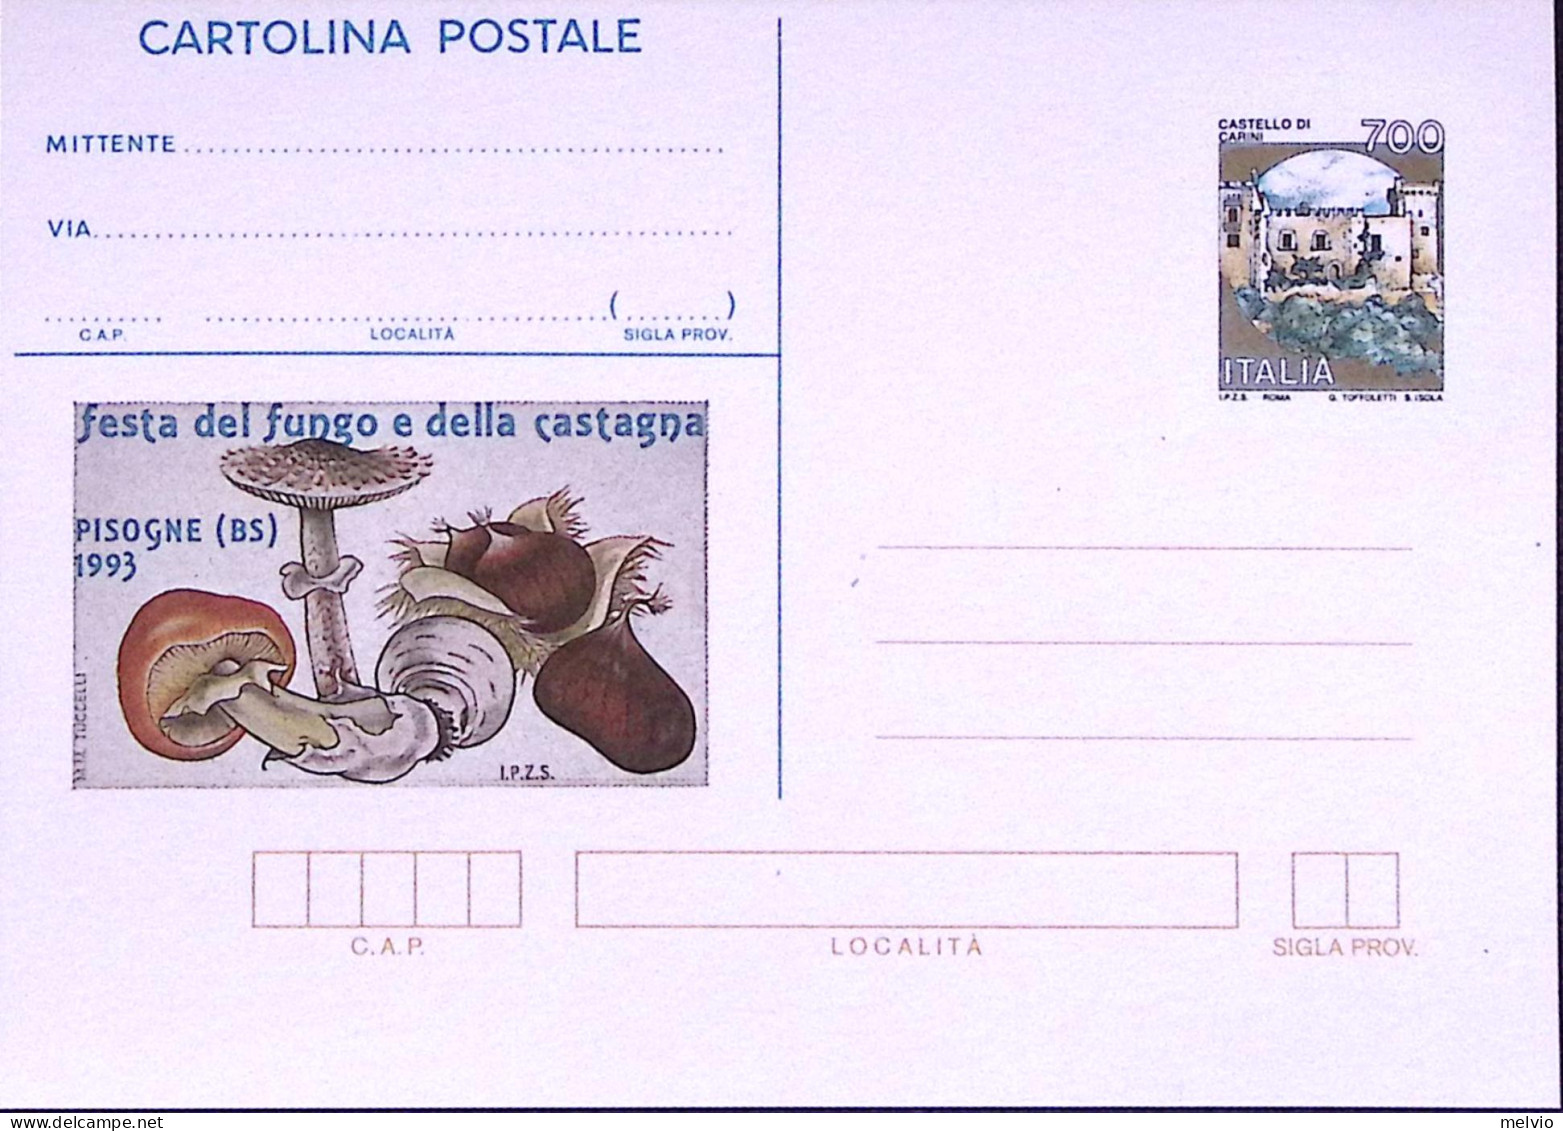 1993-PISOGNE Funghi E Castagne Cartolina Postale Castelli Lire 700, Soprastampat - Stamped Stationery